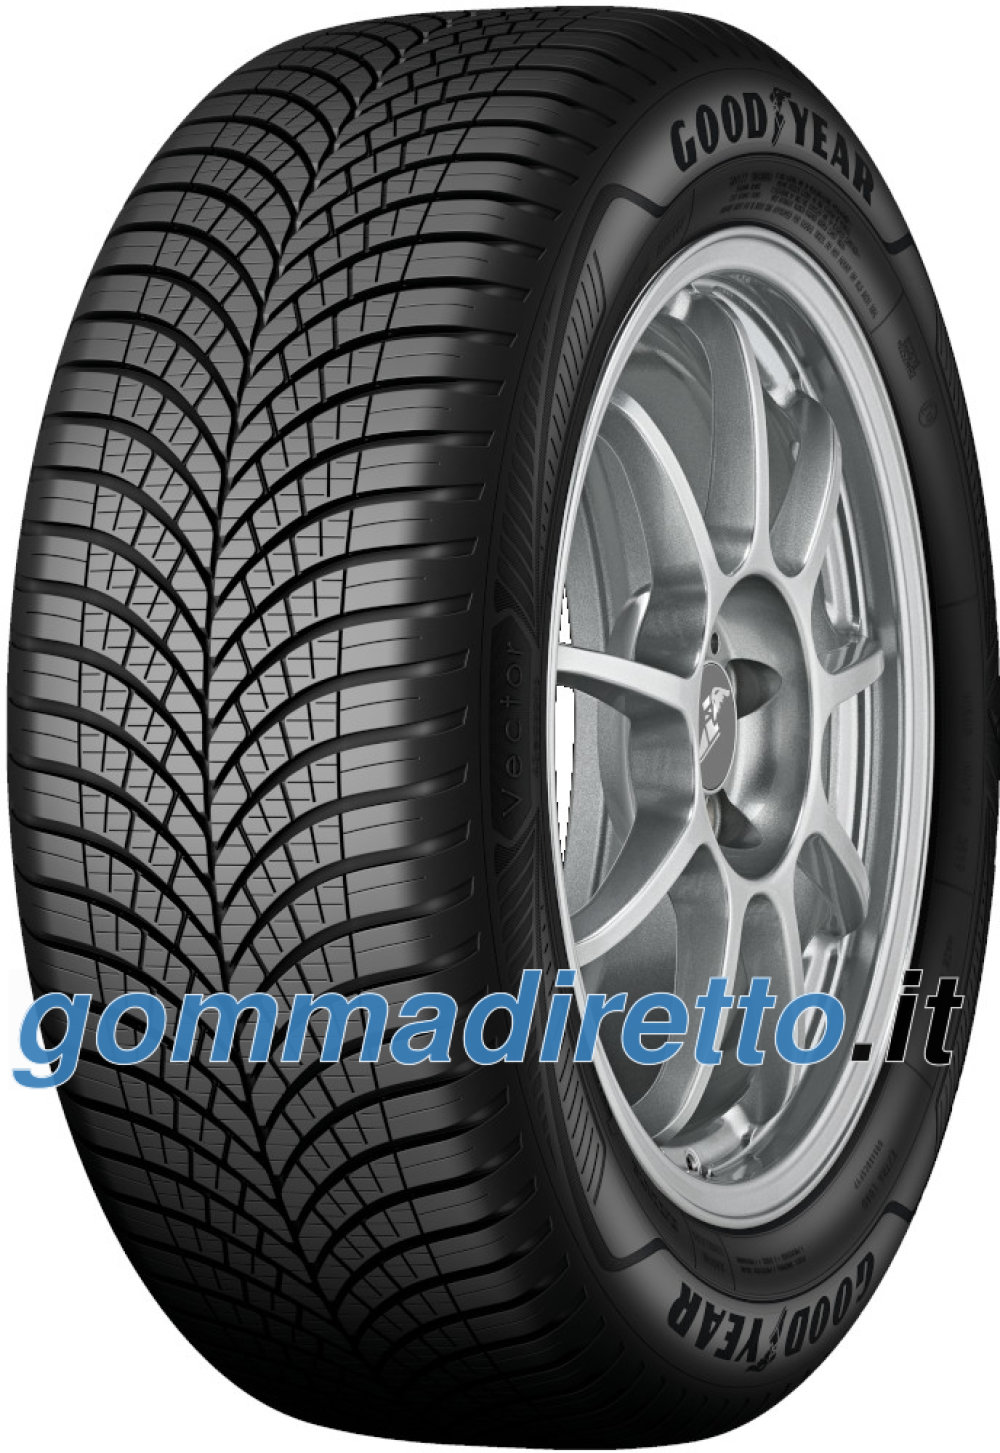 https://image.delti.com/tyre-pictures/1000/Brands/Goodyear/130/Profil_Vector4SeasonsGen-3.jpg